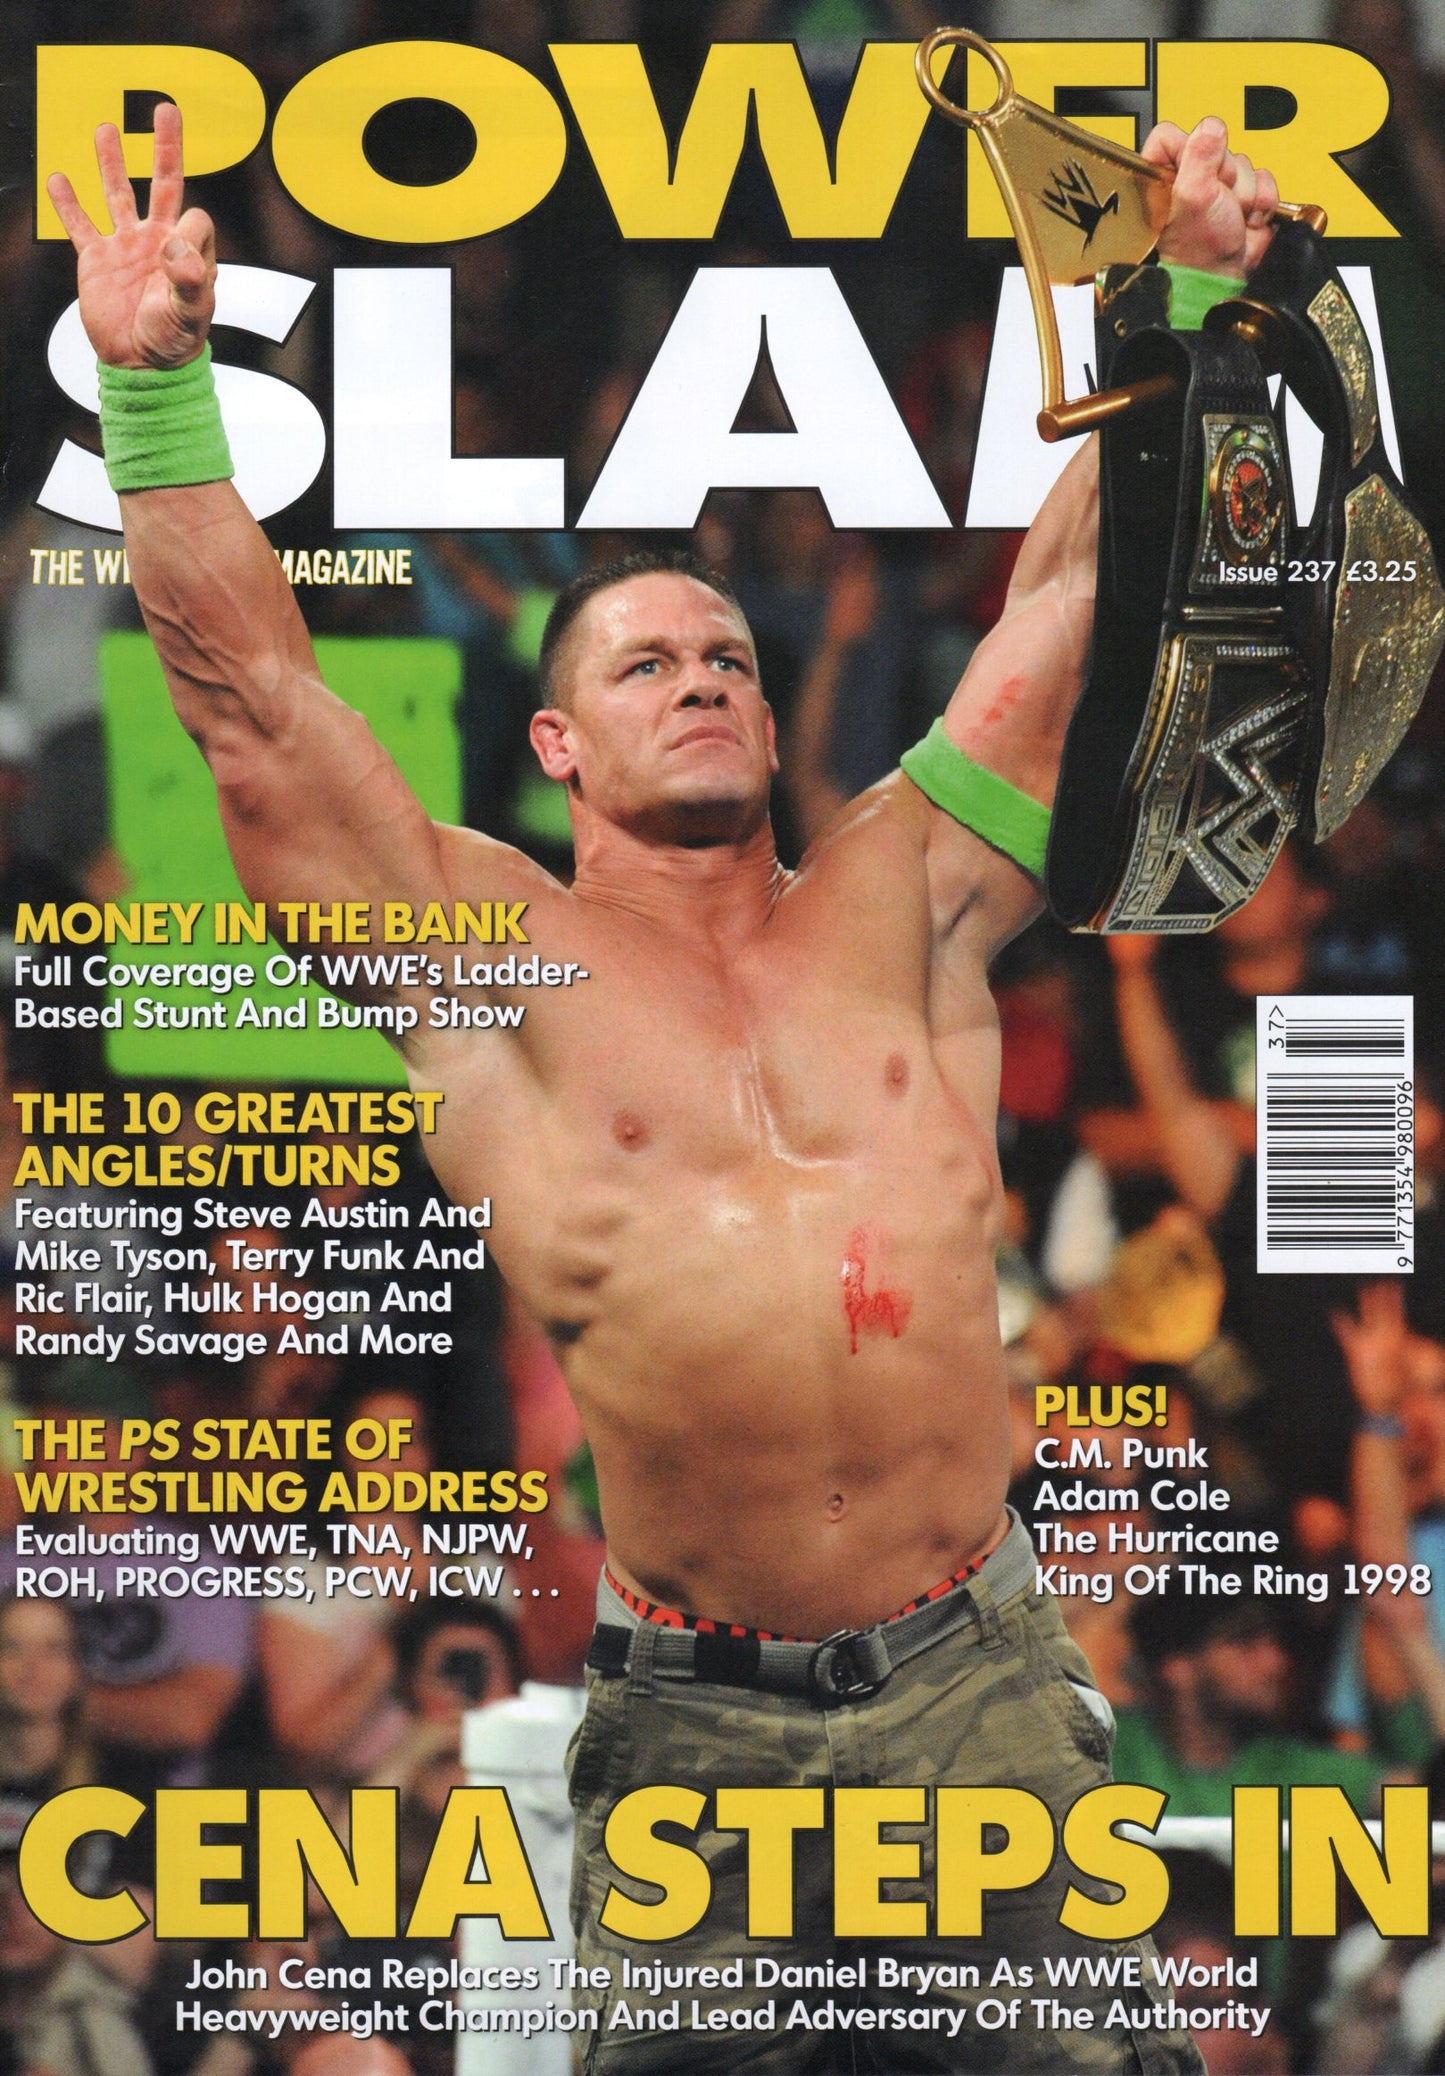 Power Slam Magazine August 2014 Issue 237